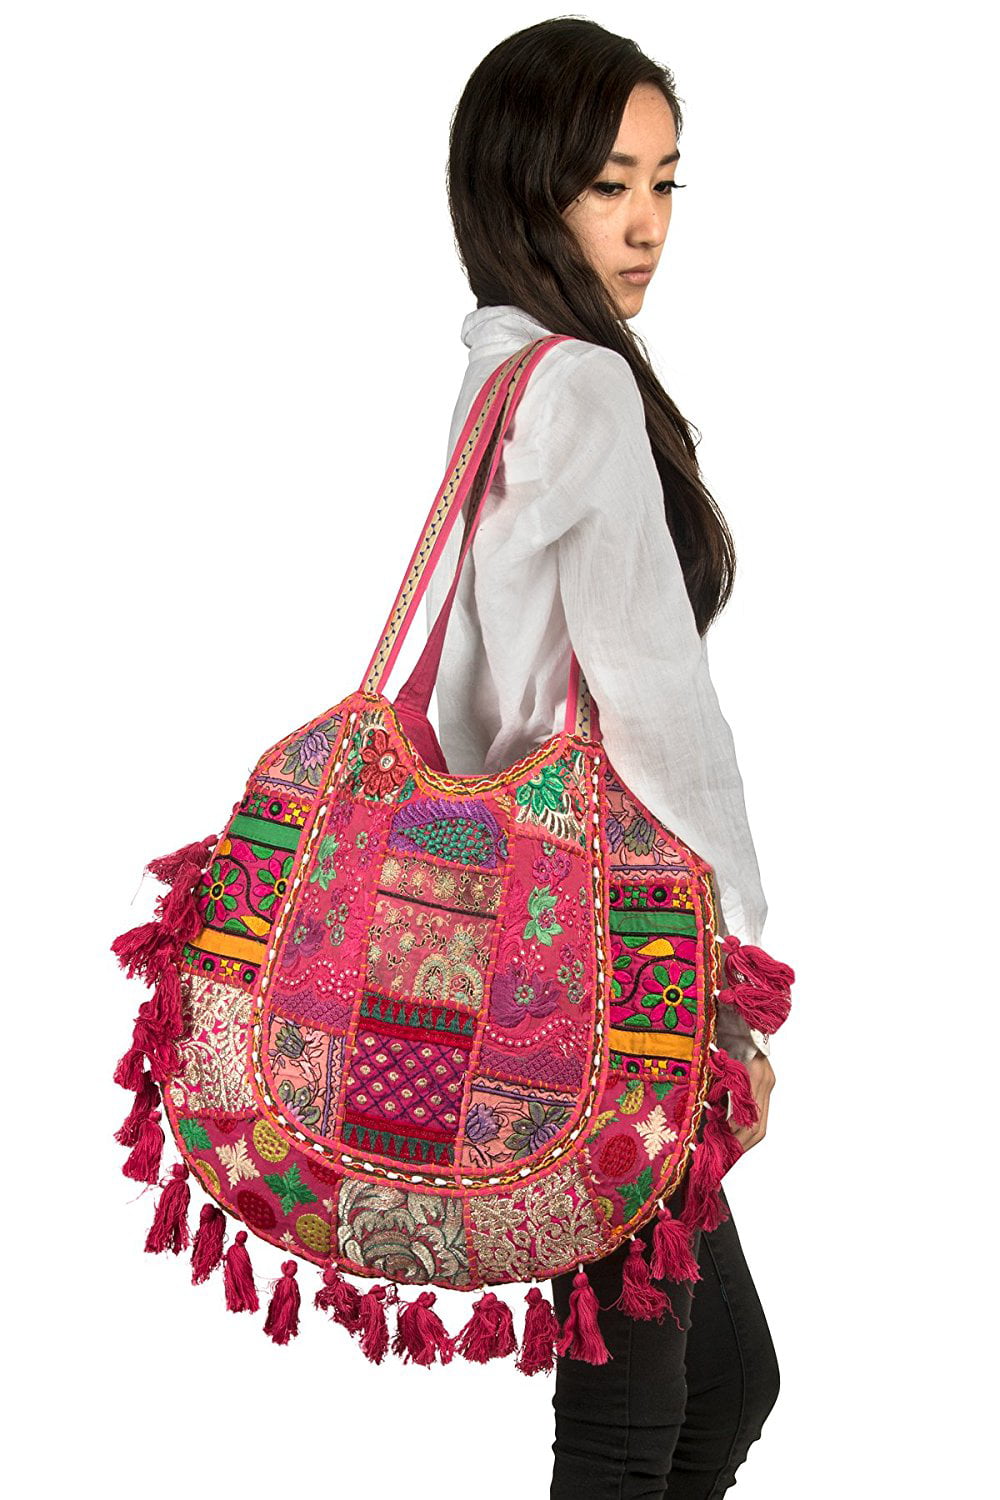 Boho Style Shoulder Bag, Hippie Women's Handbag